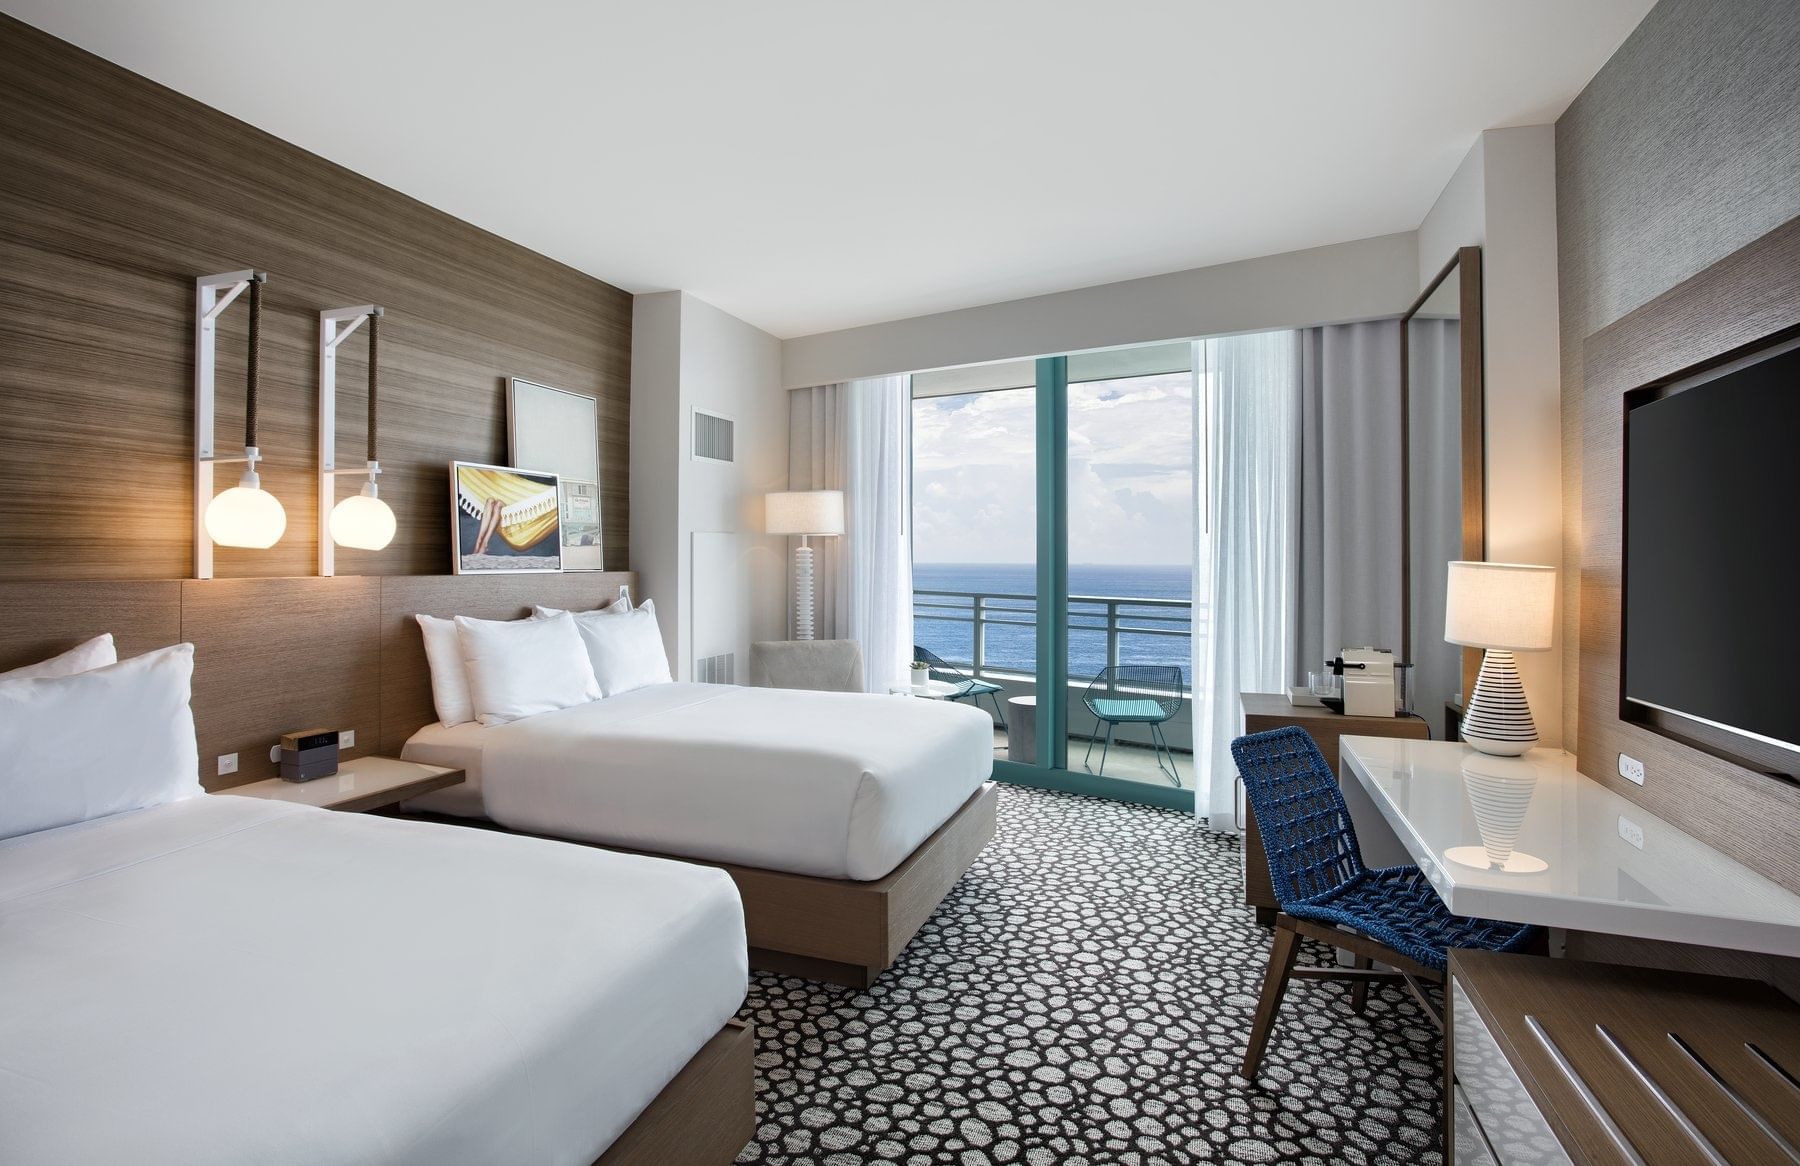 Ocean view from king bed the bedroom at at Diplomat Resort 